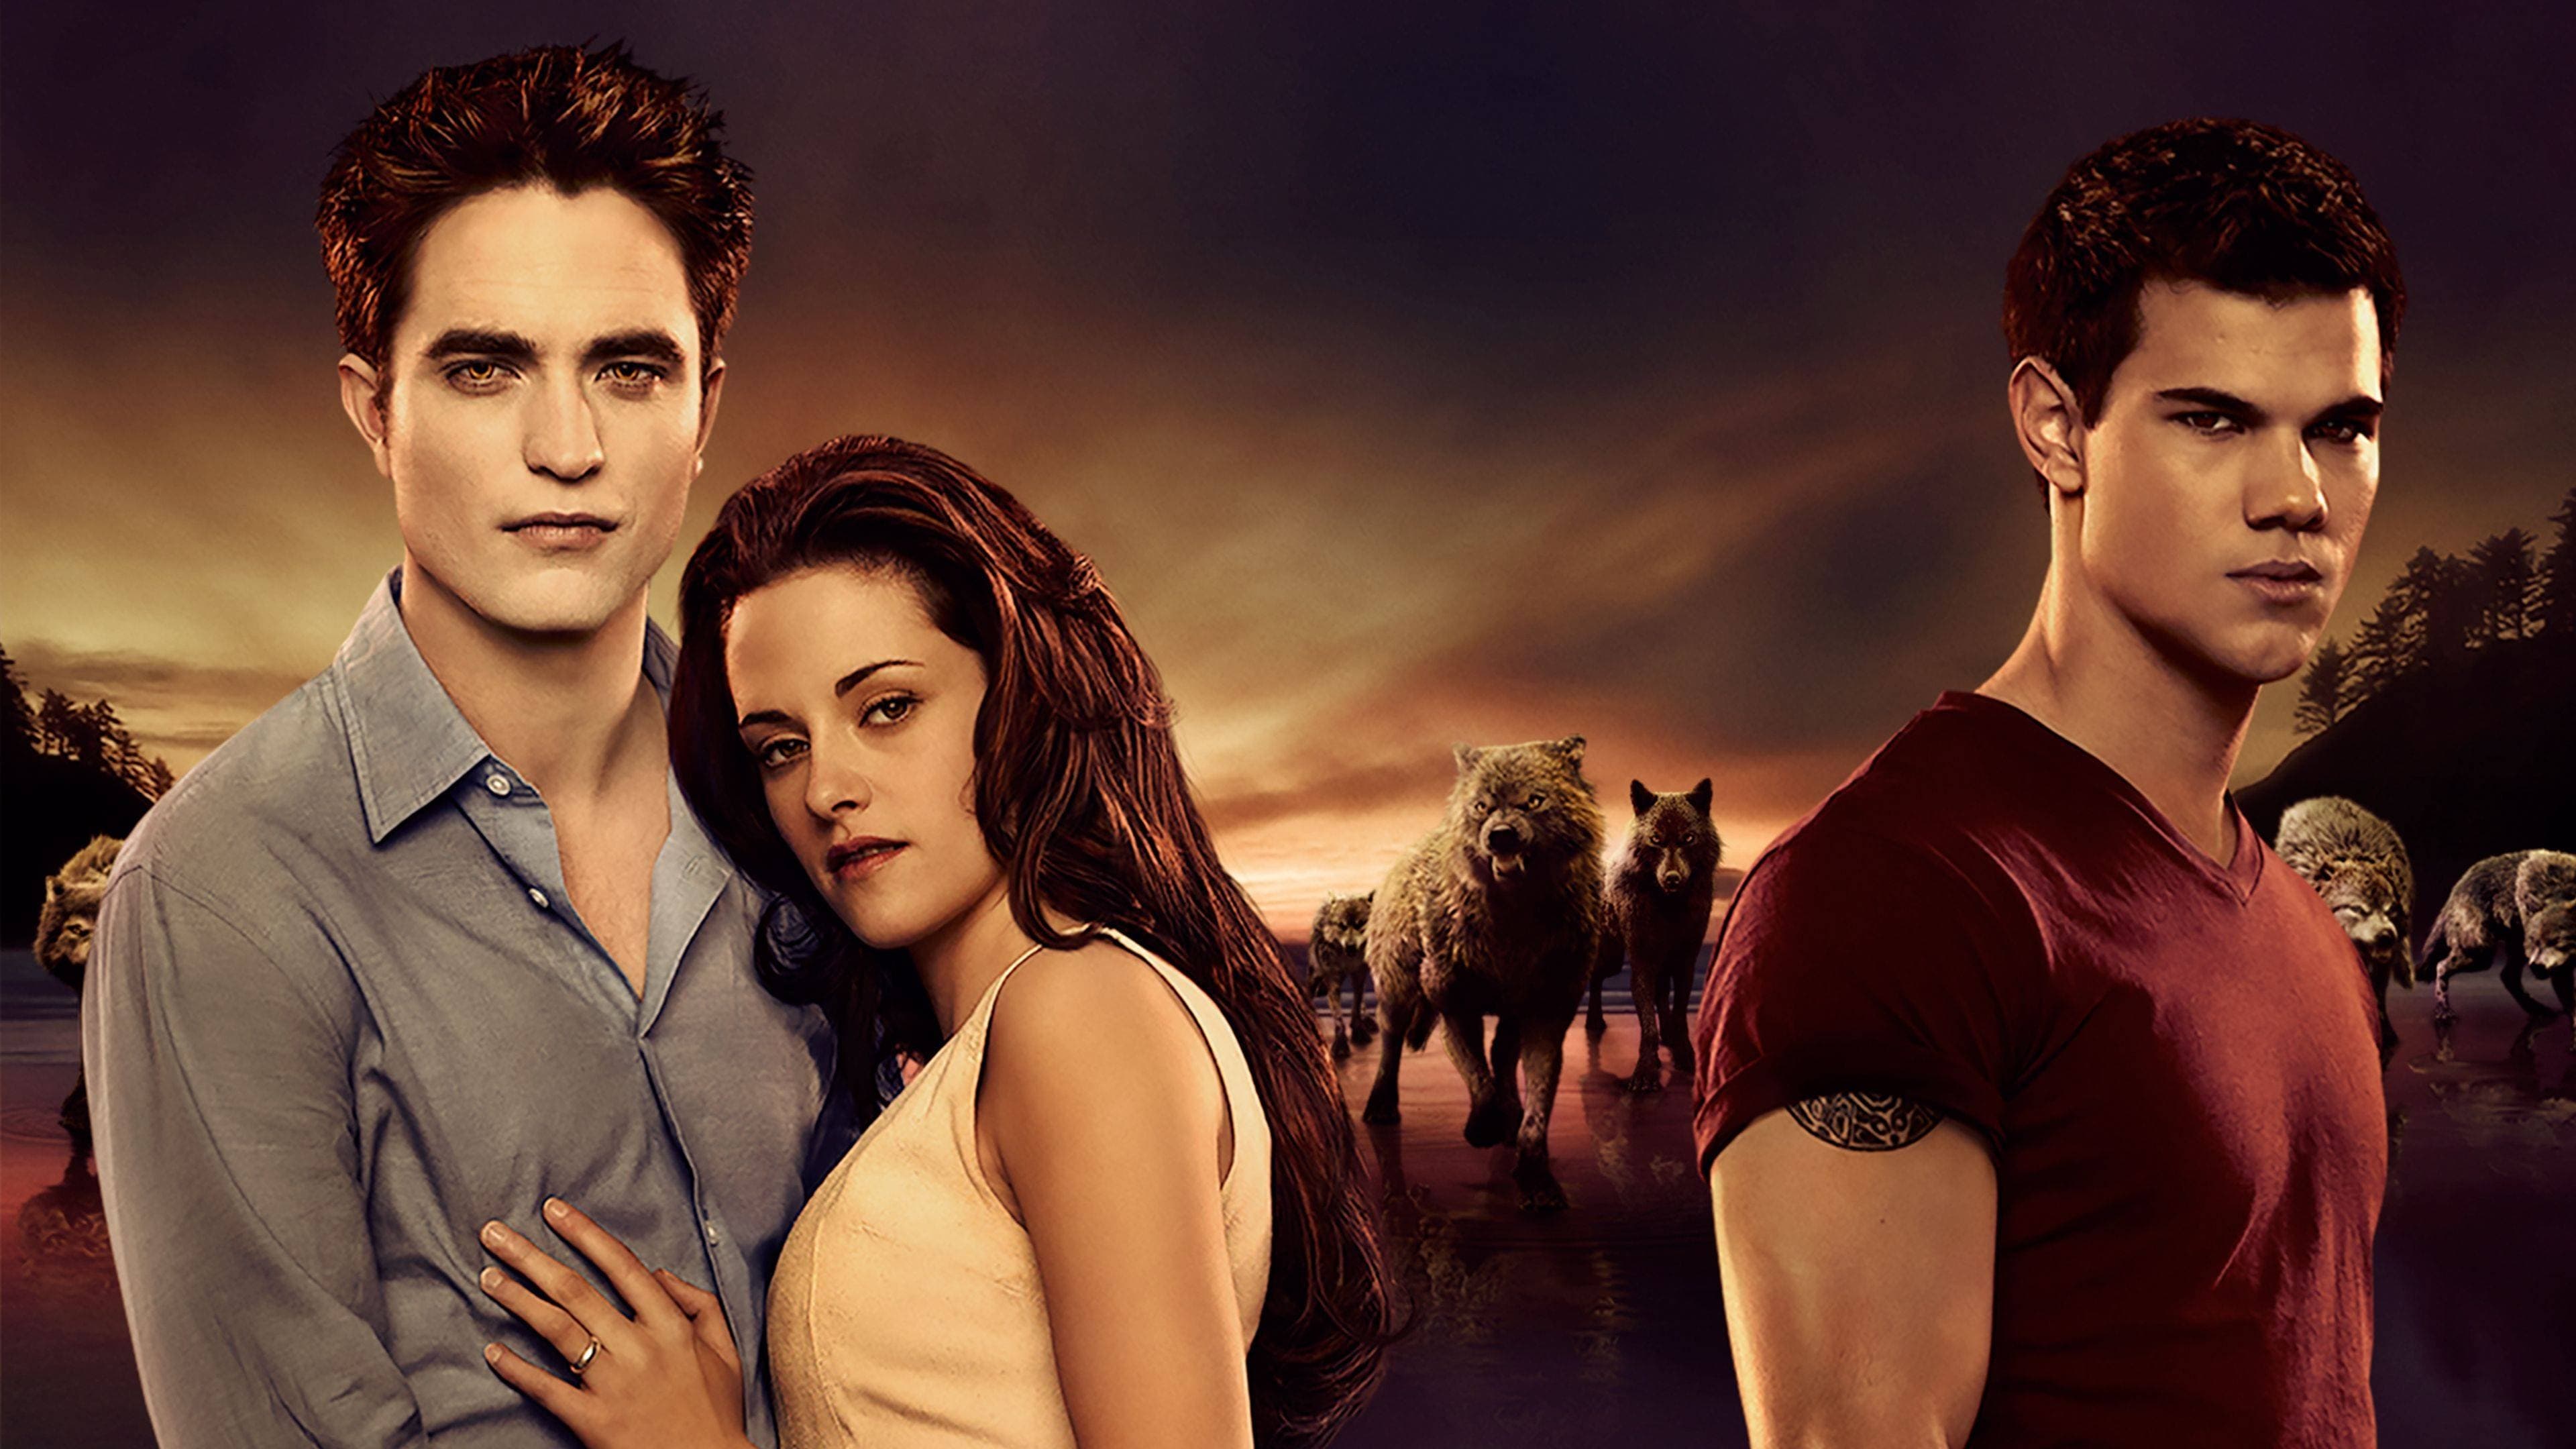 فيلم The Twilight Saga: Breaking Dawn - Part 1 مترجم.